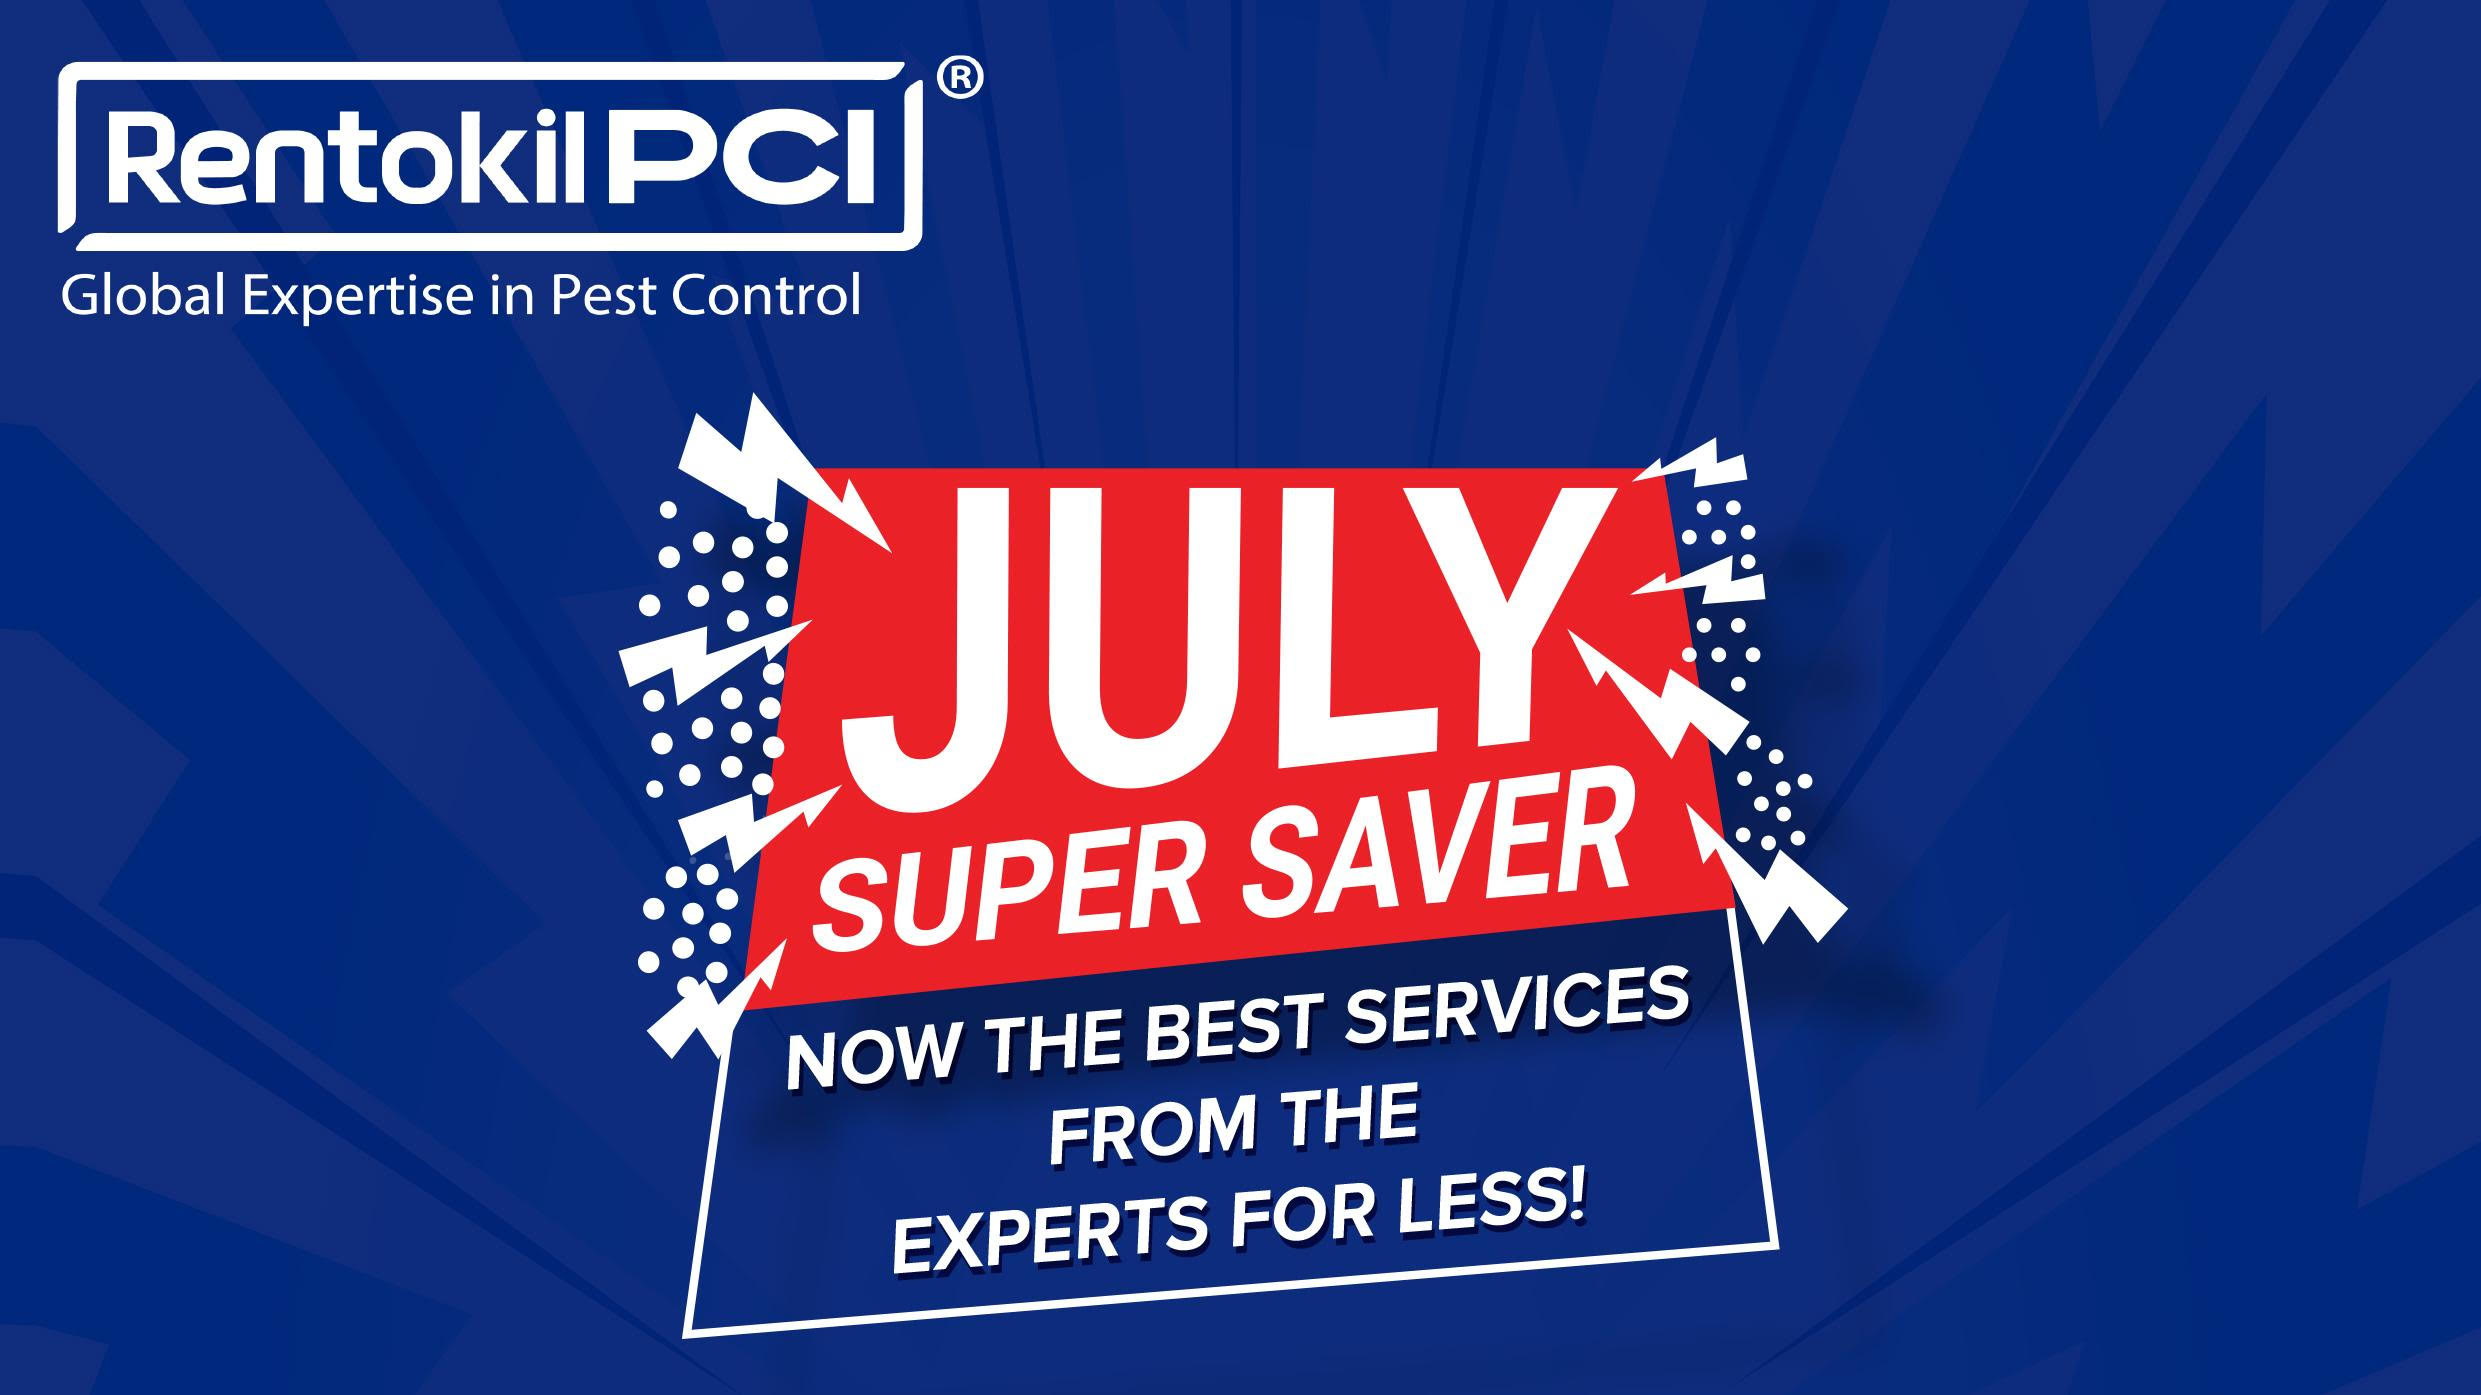 Rentokil PCI July Super Saver campaign